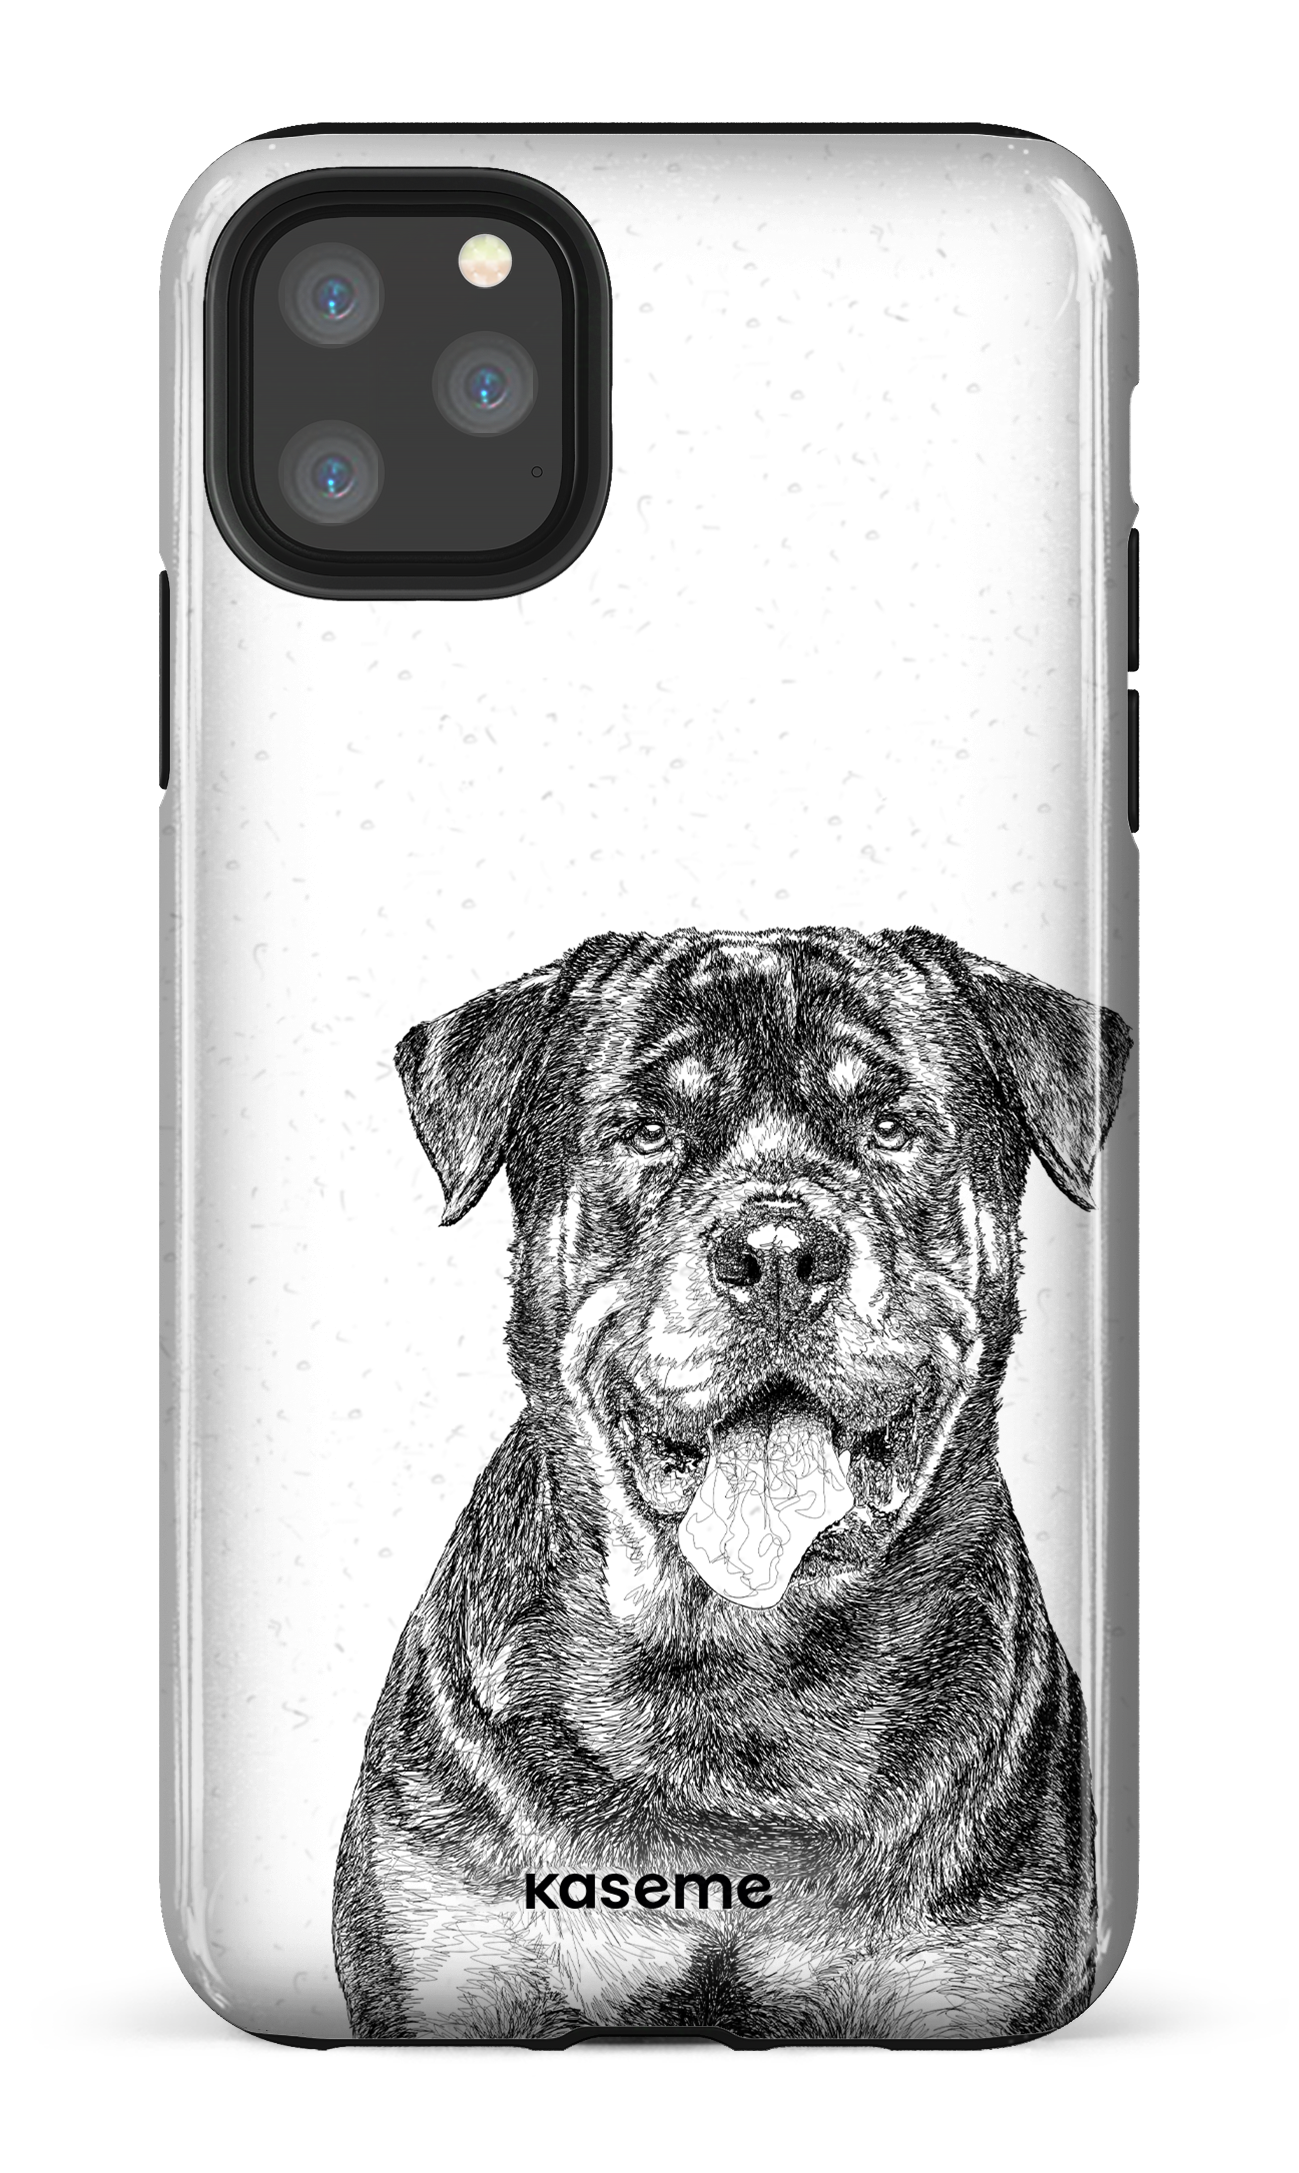 Rottweiler - iPhone 11 Pro Max